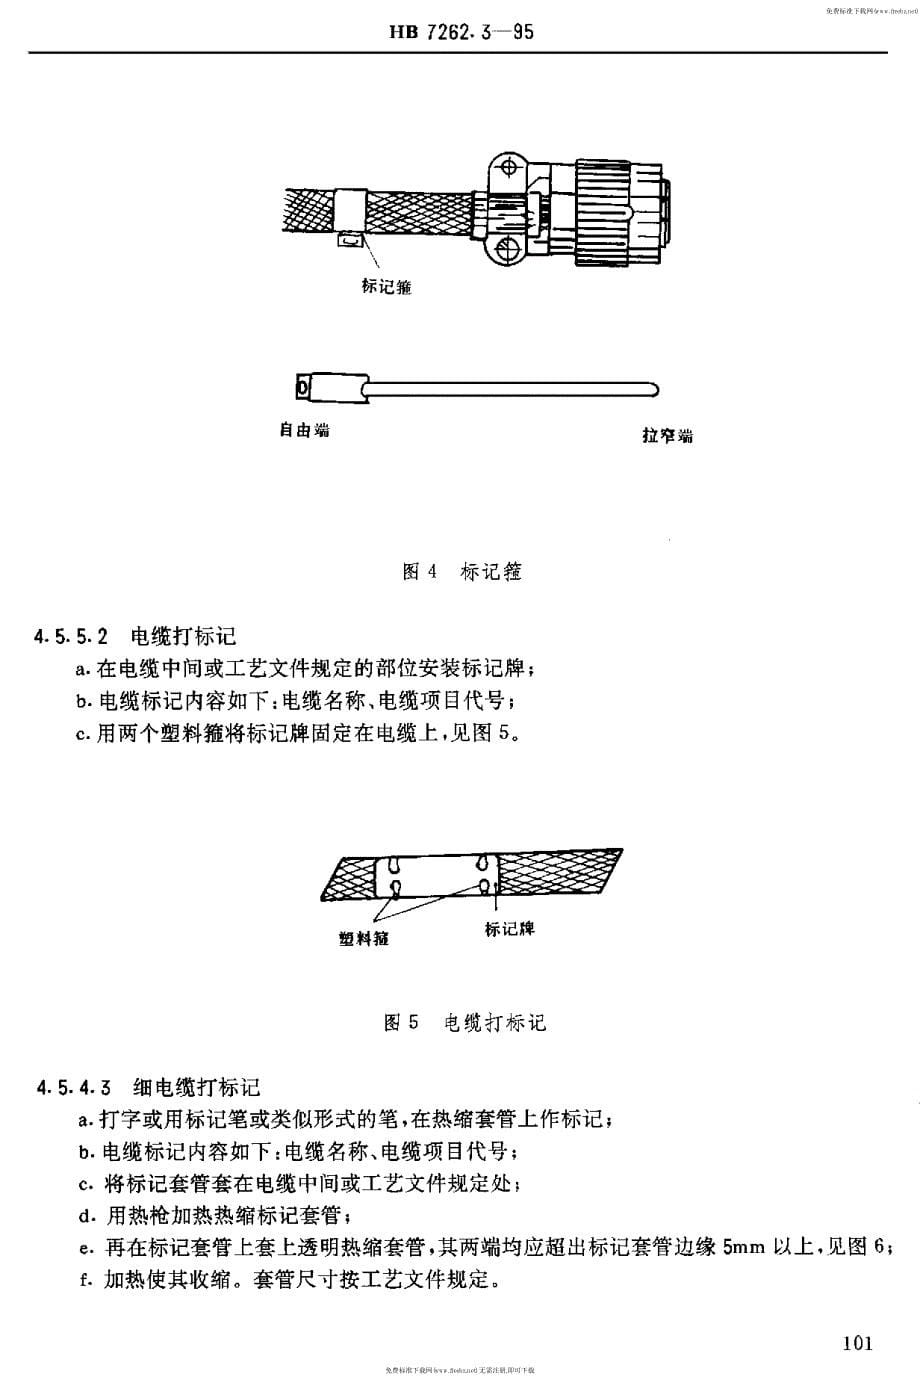 HB-7262.3-1995-航空产品电装工艺-线束和电缆的制作_第5页